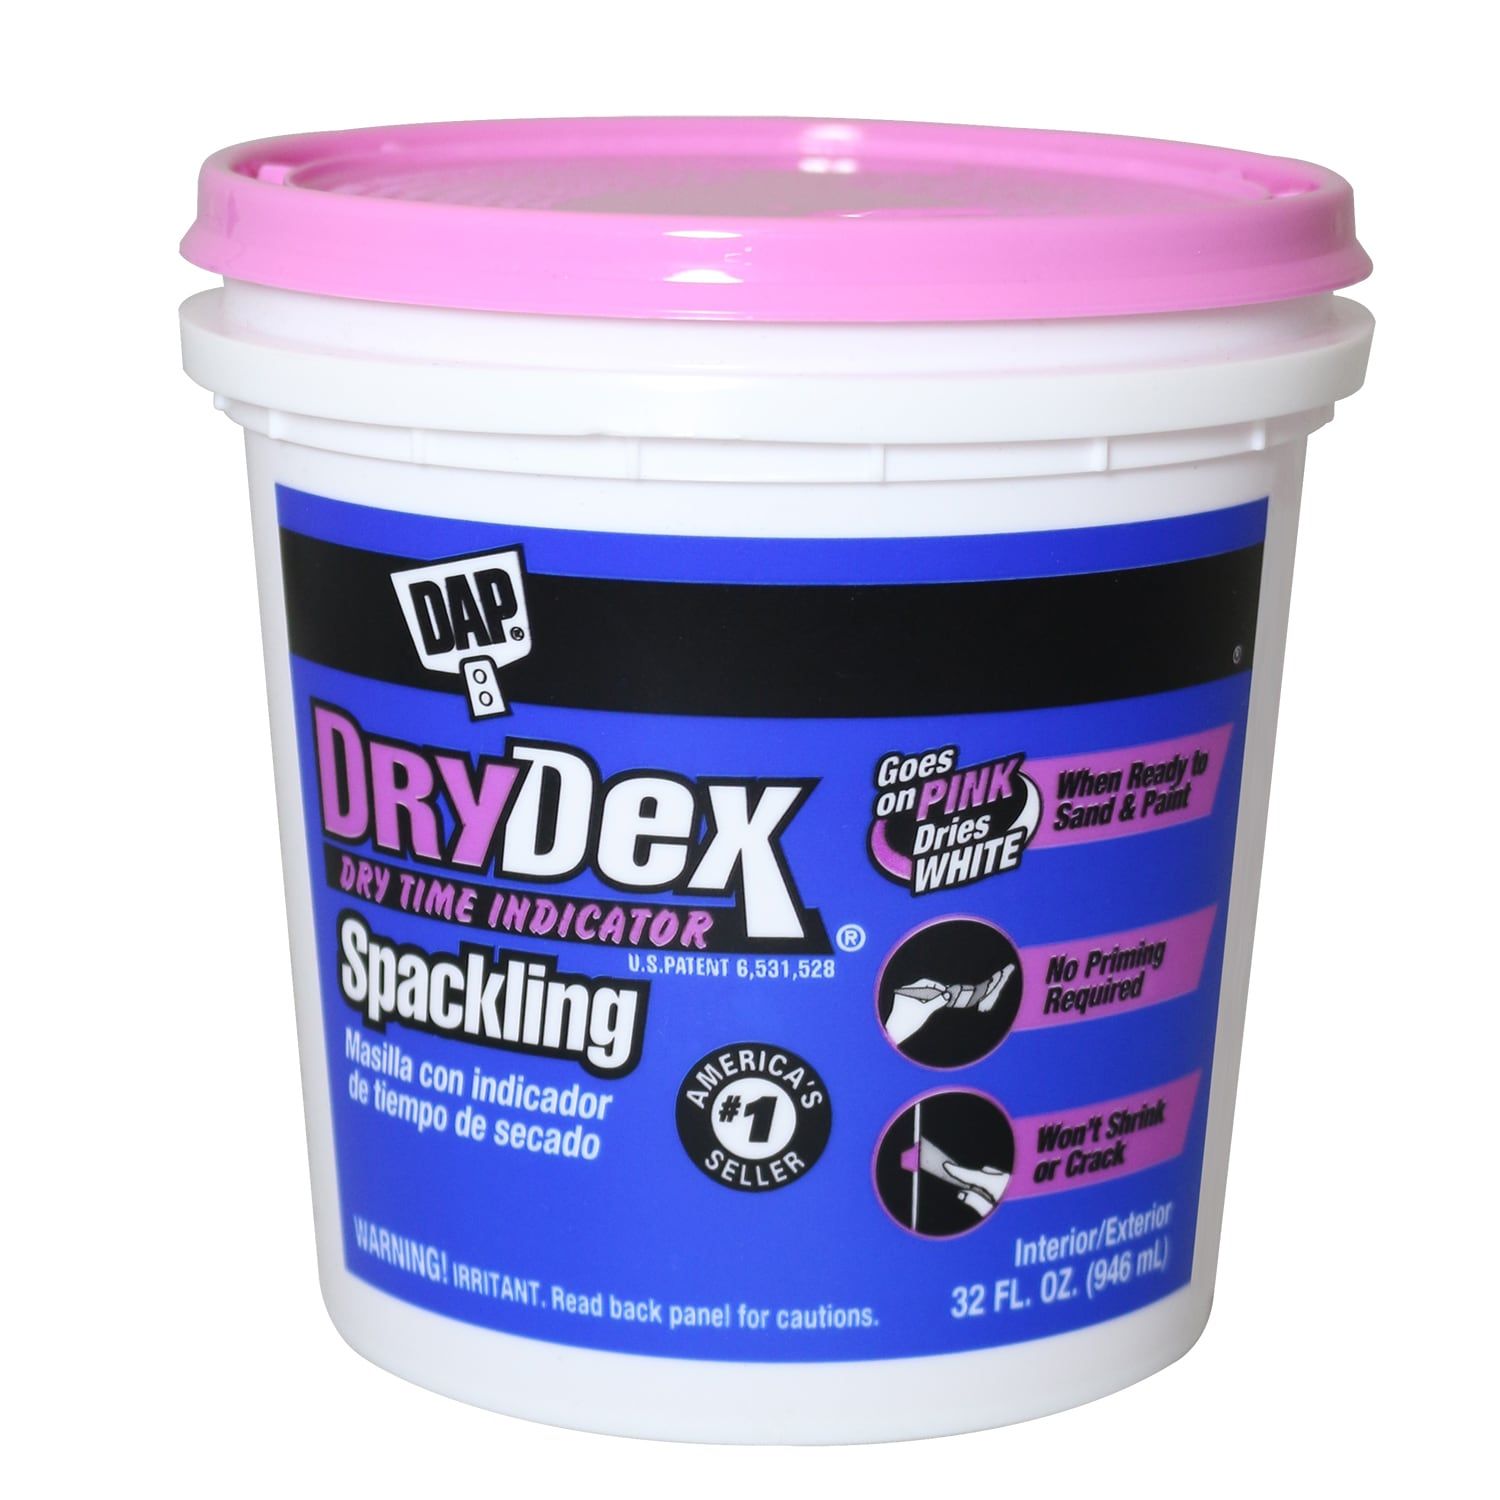 DryDex White Spackling